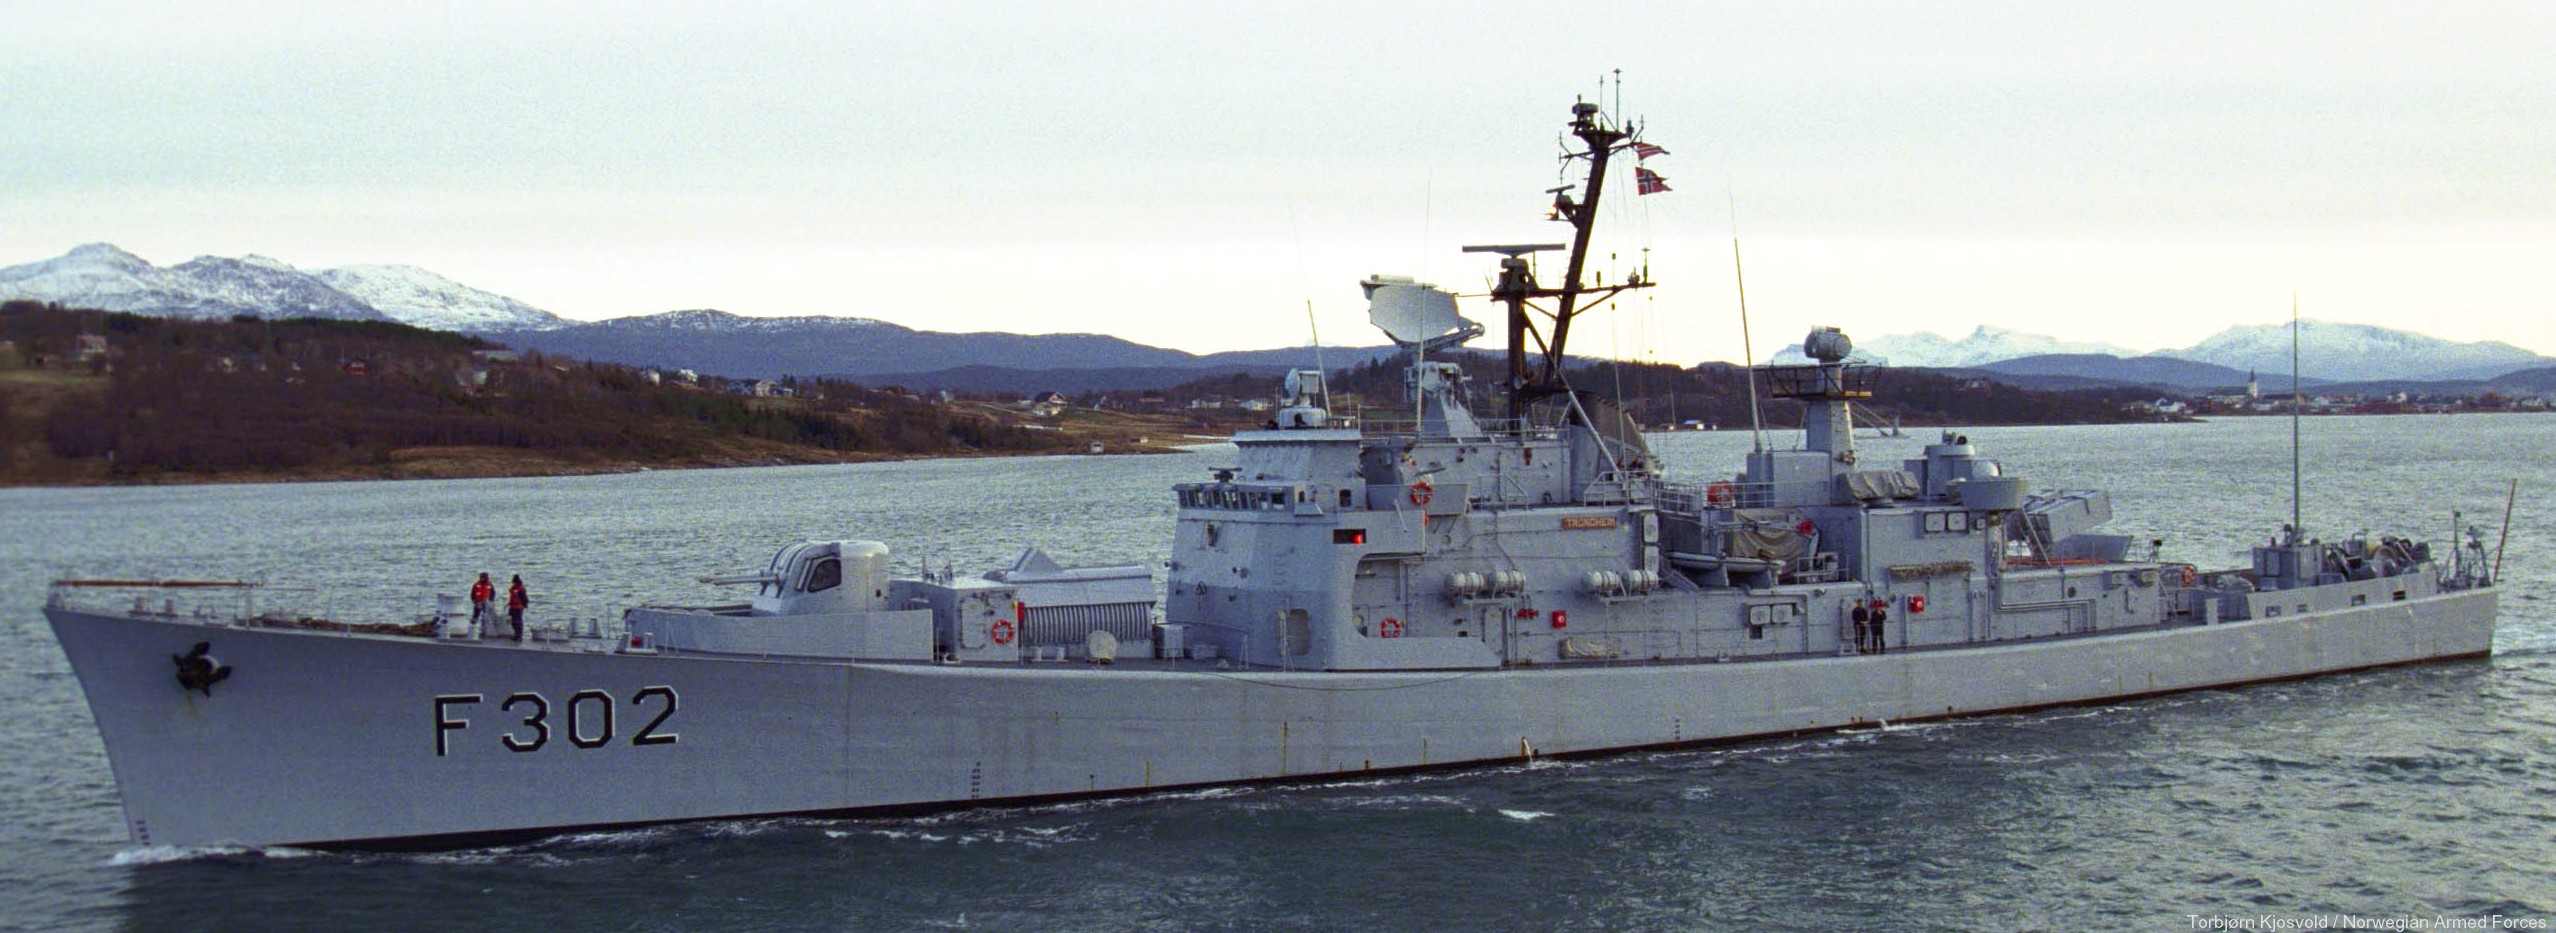 f-302 hnoms trondheim knm oslo class frigate royal norwegian navy sjoforsvaret 04